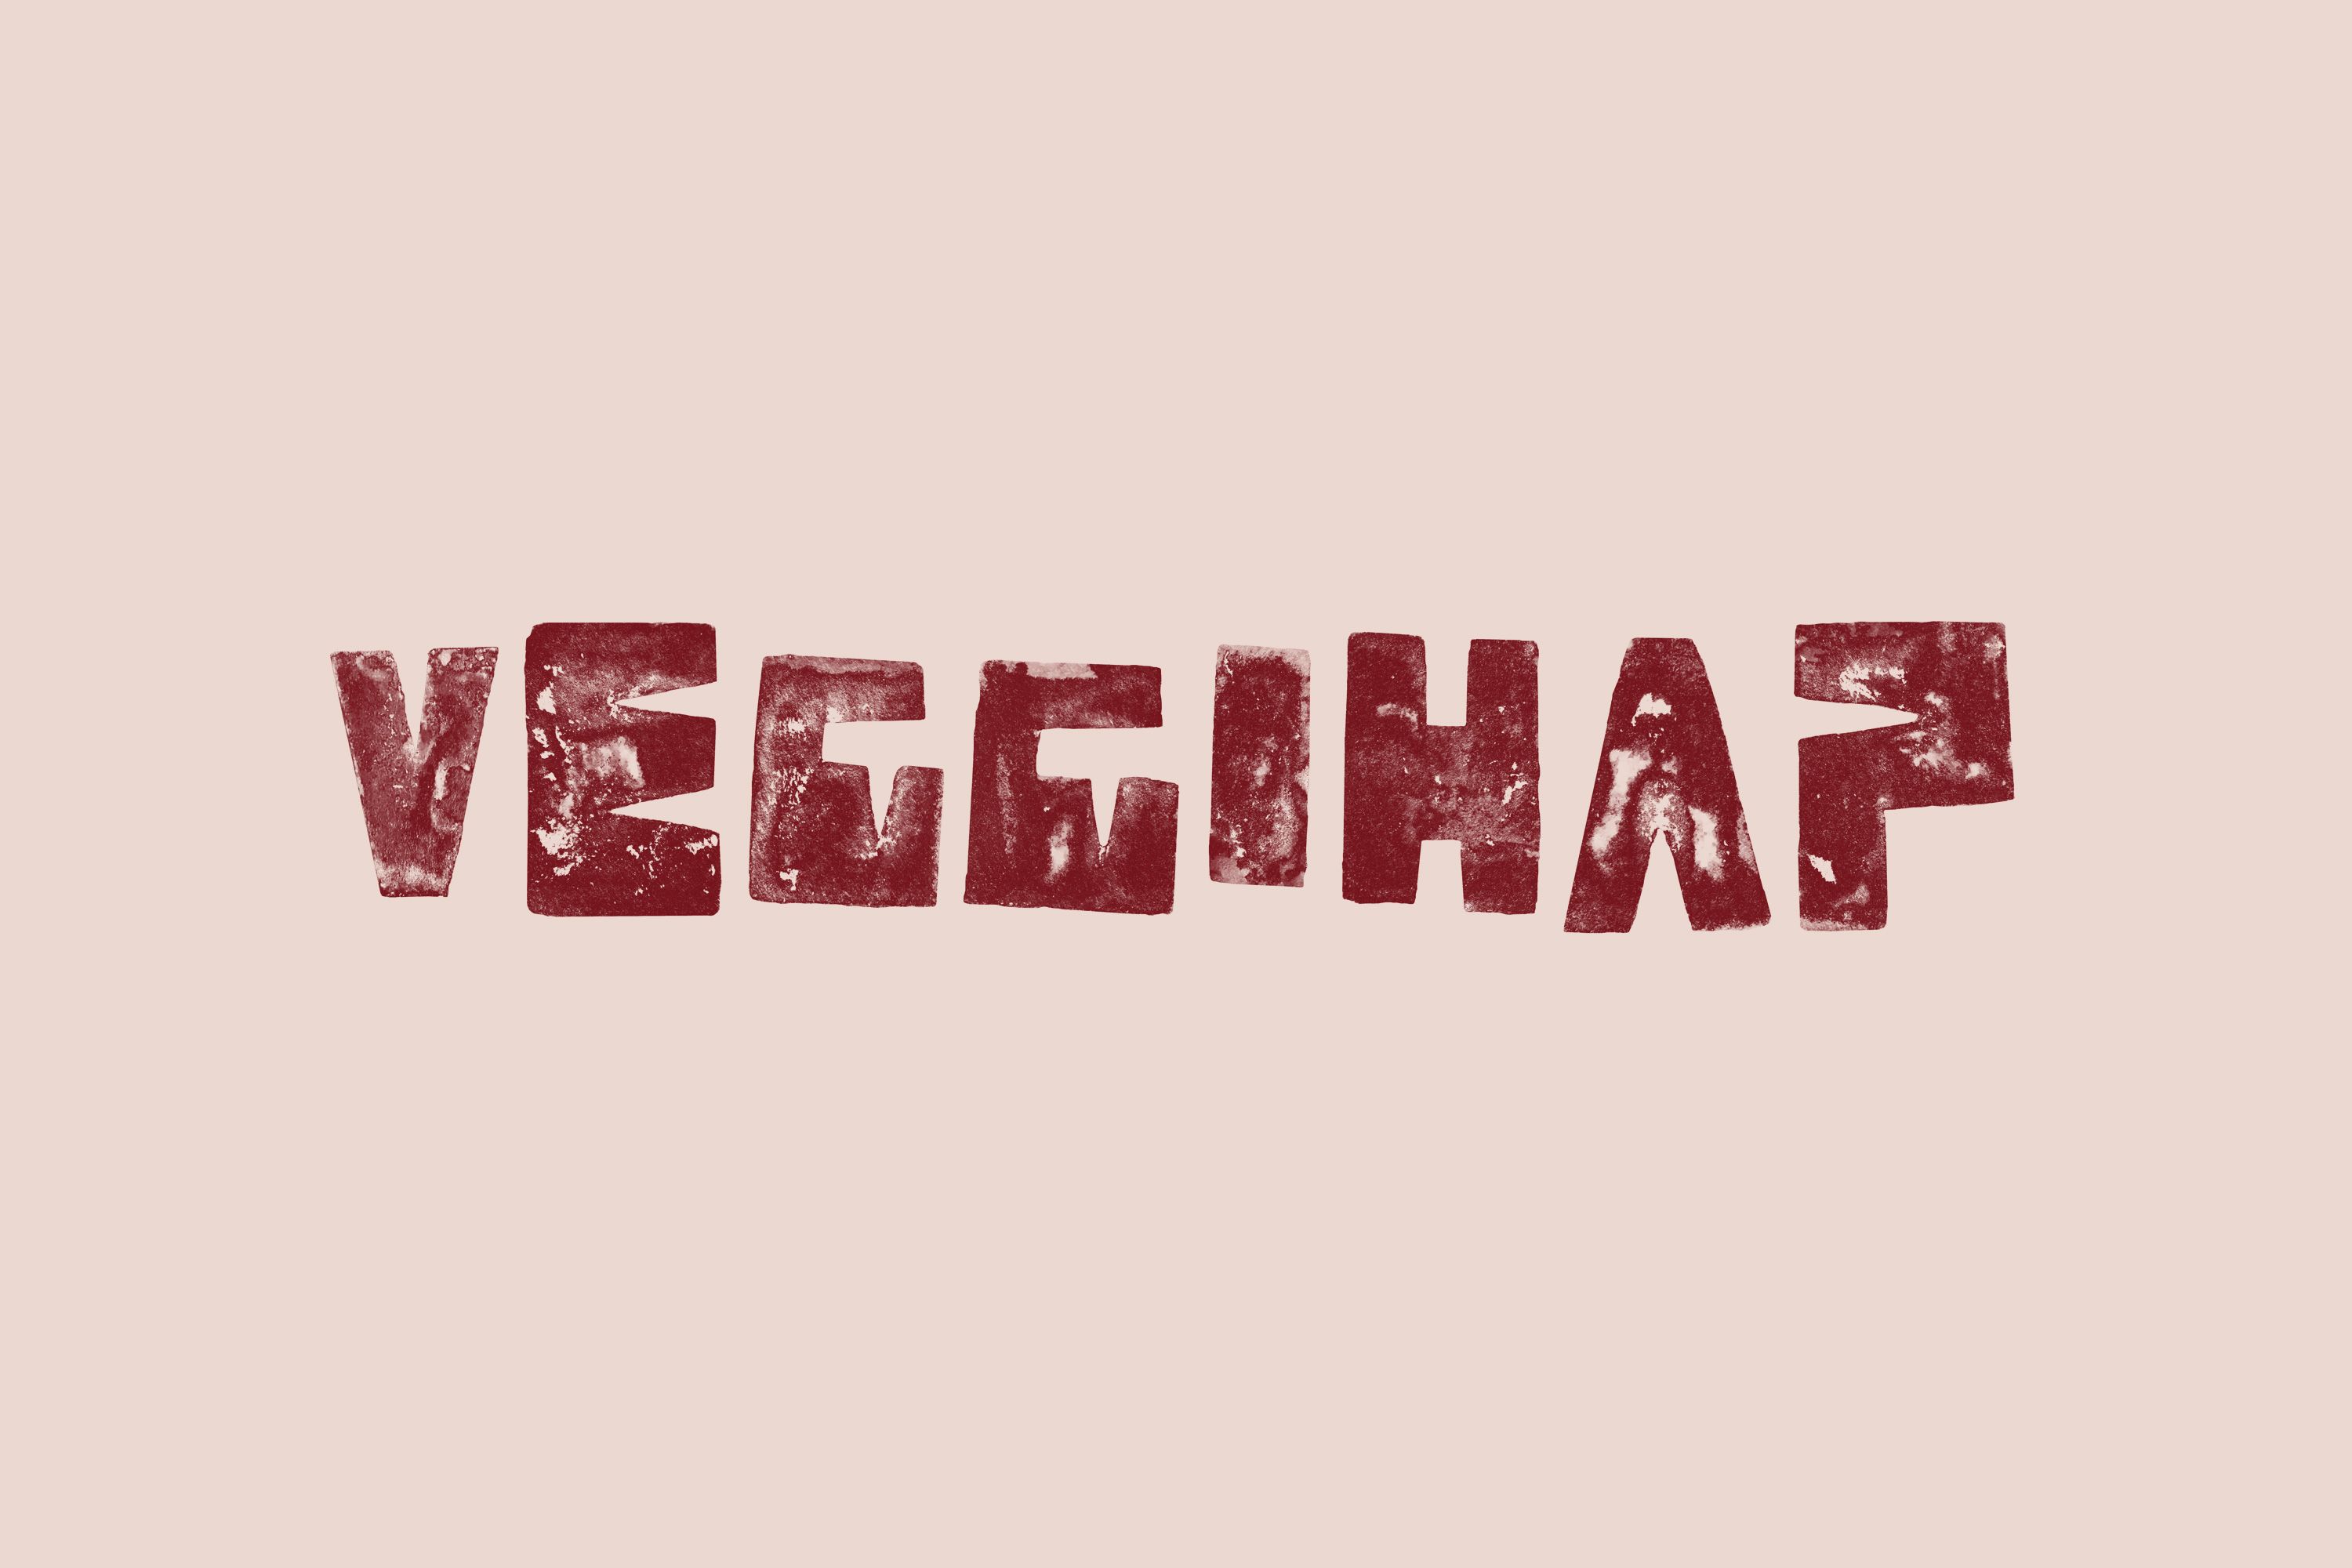 DITTMAR_veggihap_logo